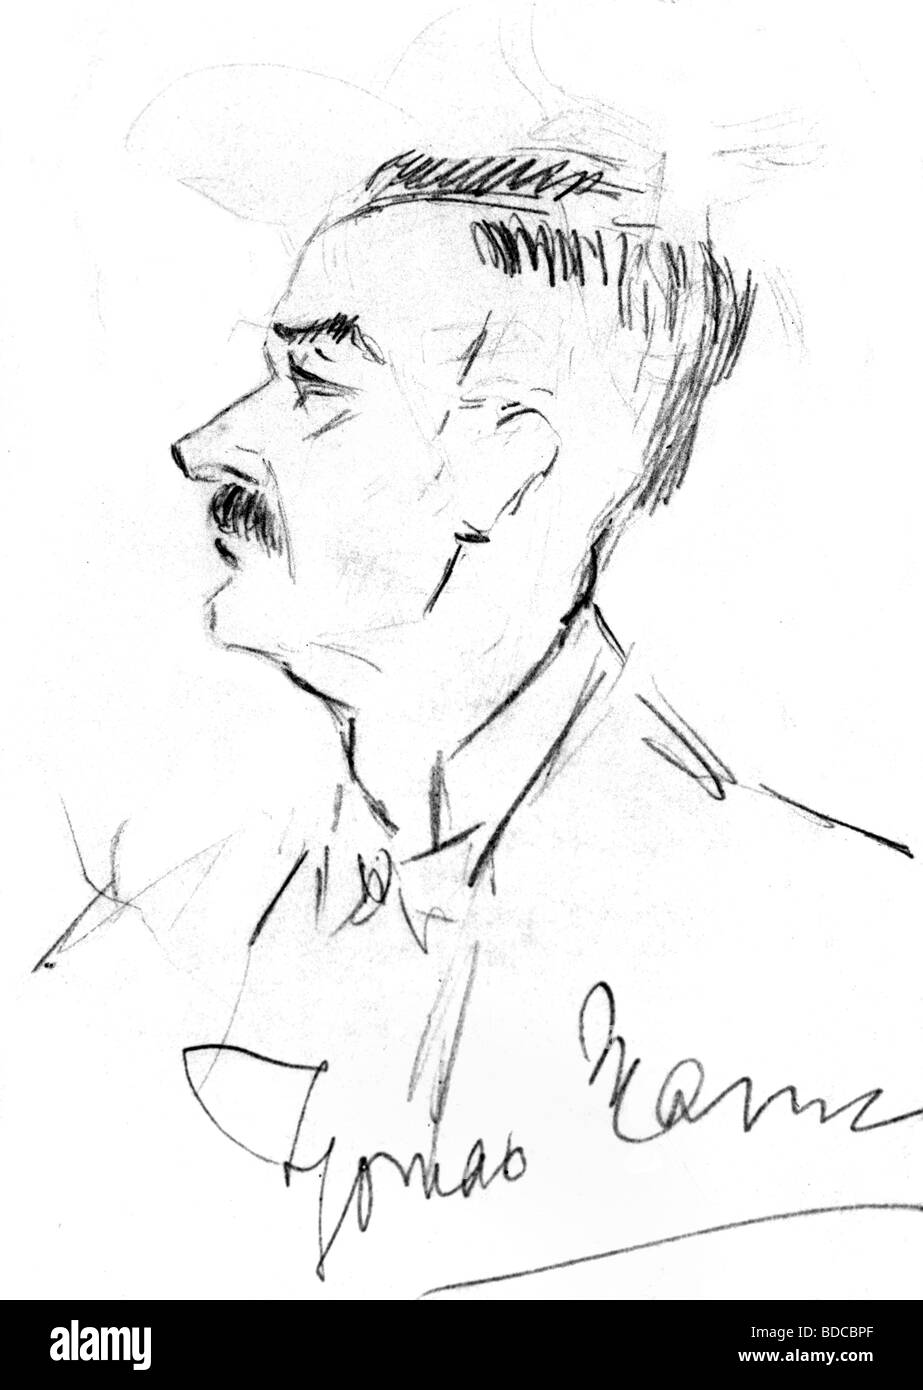 Mann, Thomas, 6.6.1875 - 12.8.1955, German author / writer, self-portrait with signature, 1928, Stock Photo